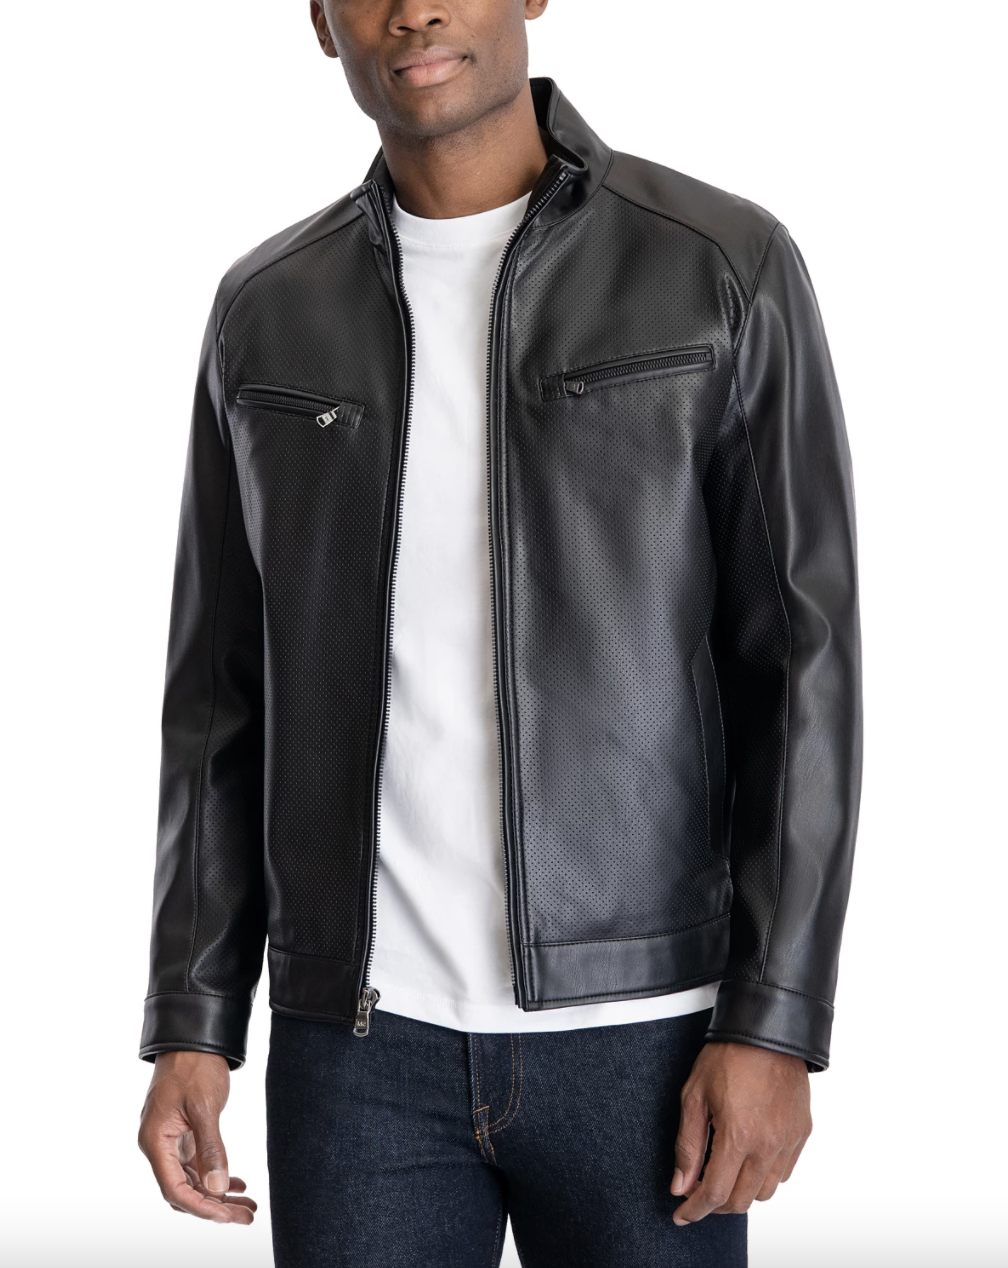 model wearing the black faux leather jacket